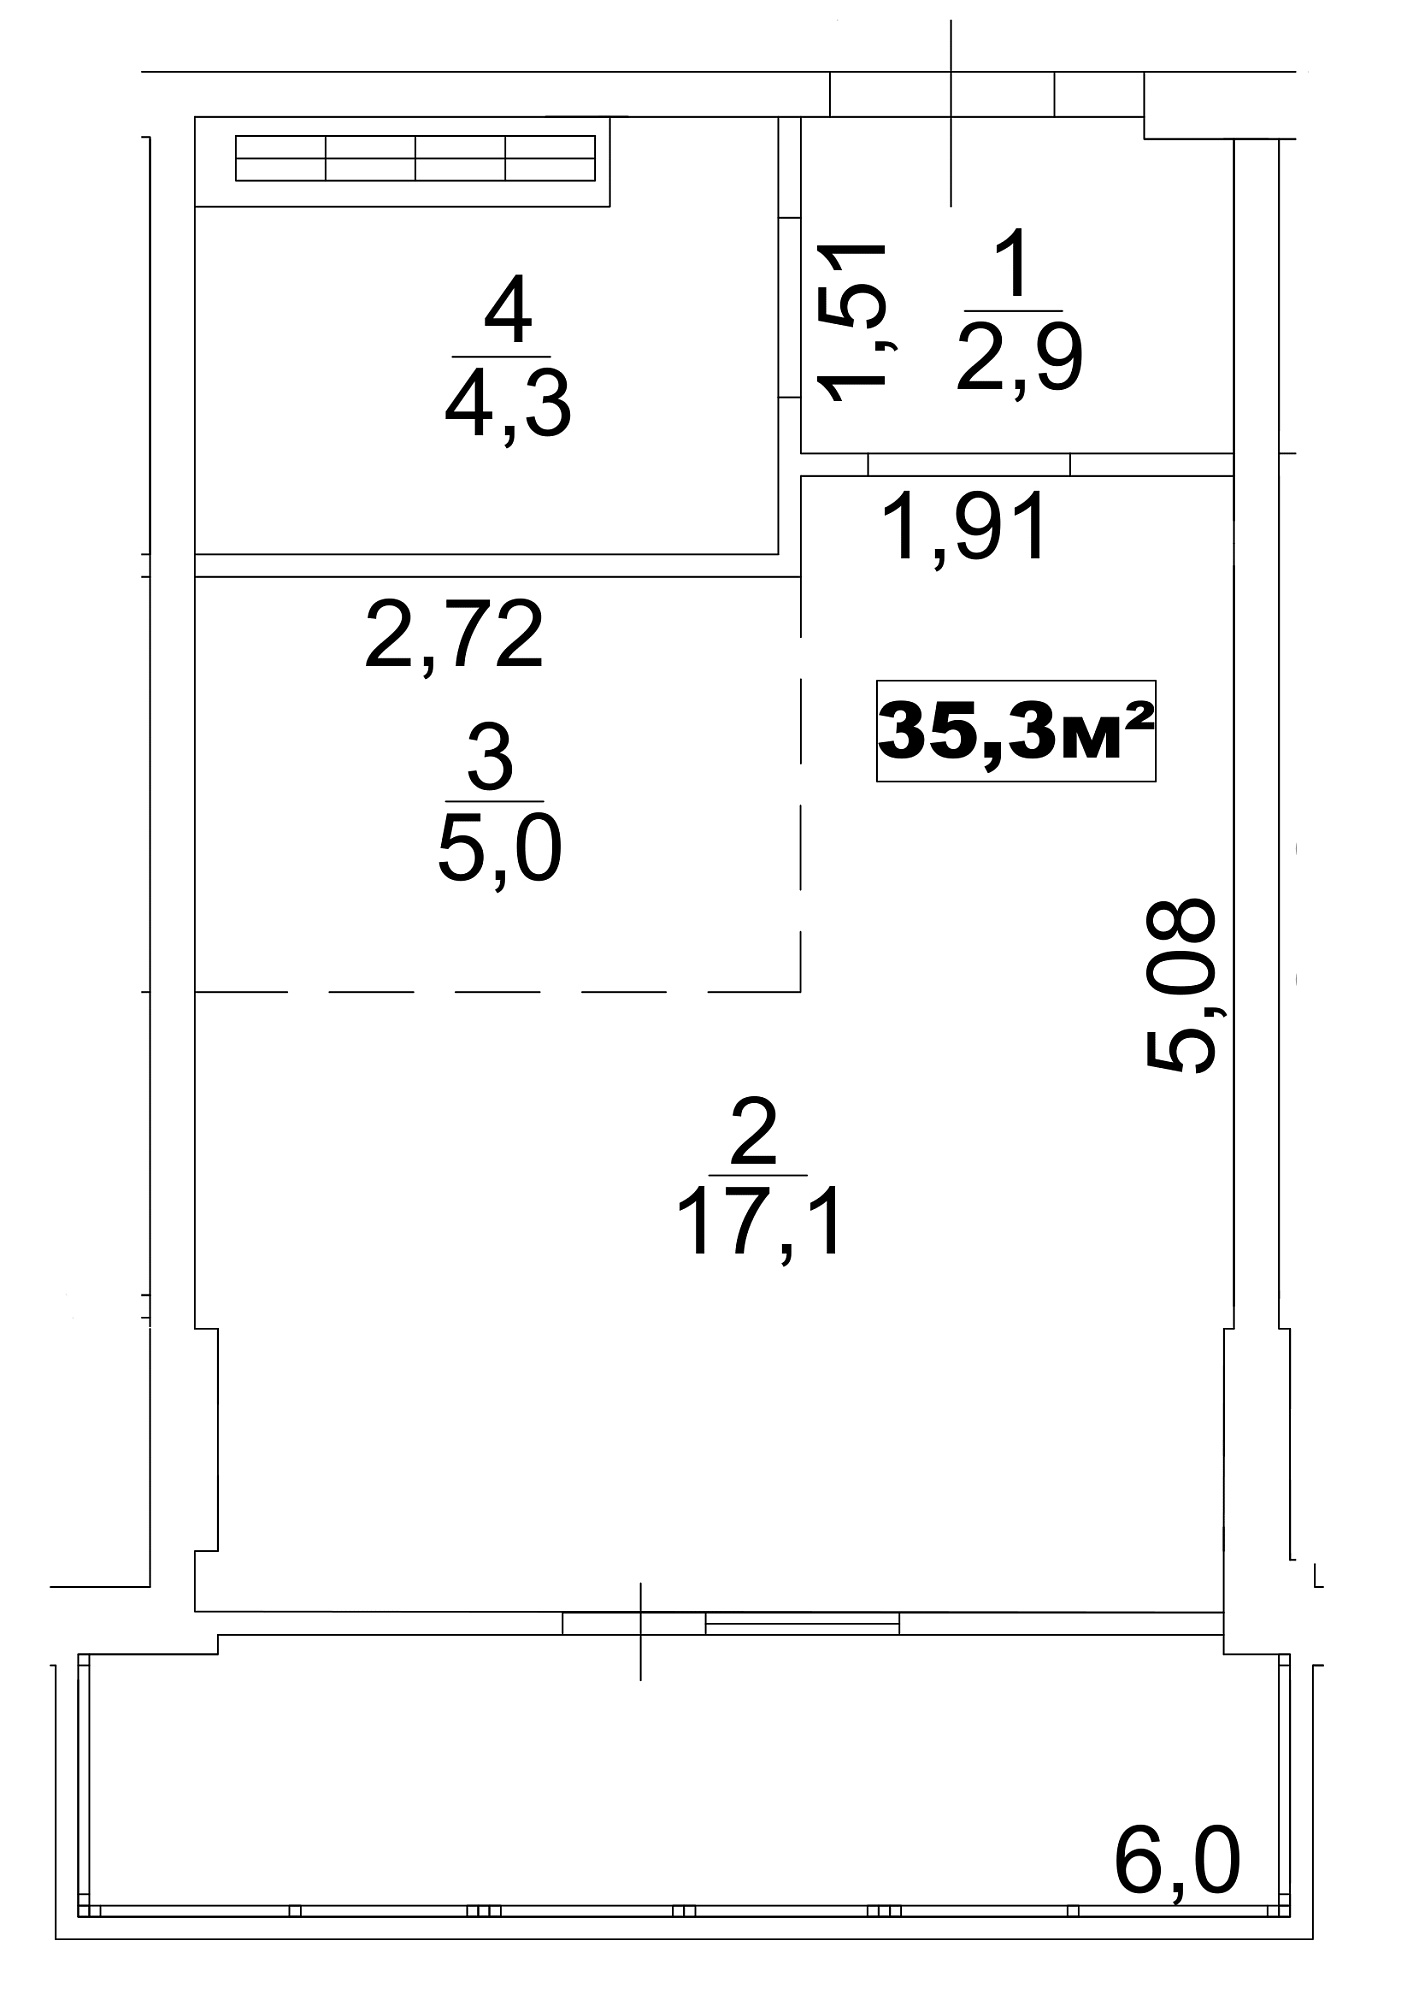 Планировка Smart-квартира площей 35.3м2, AB-13-08/0061б.